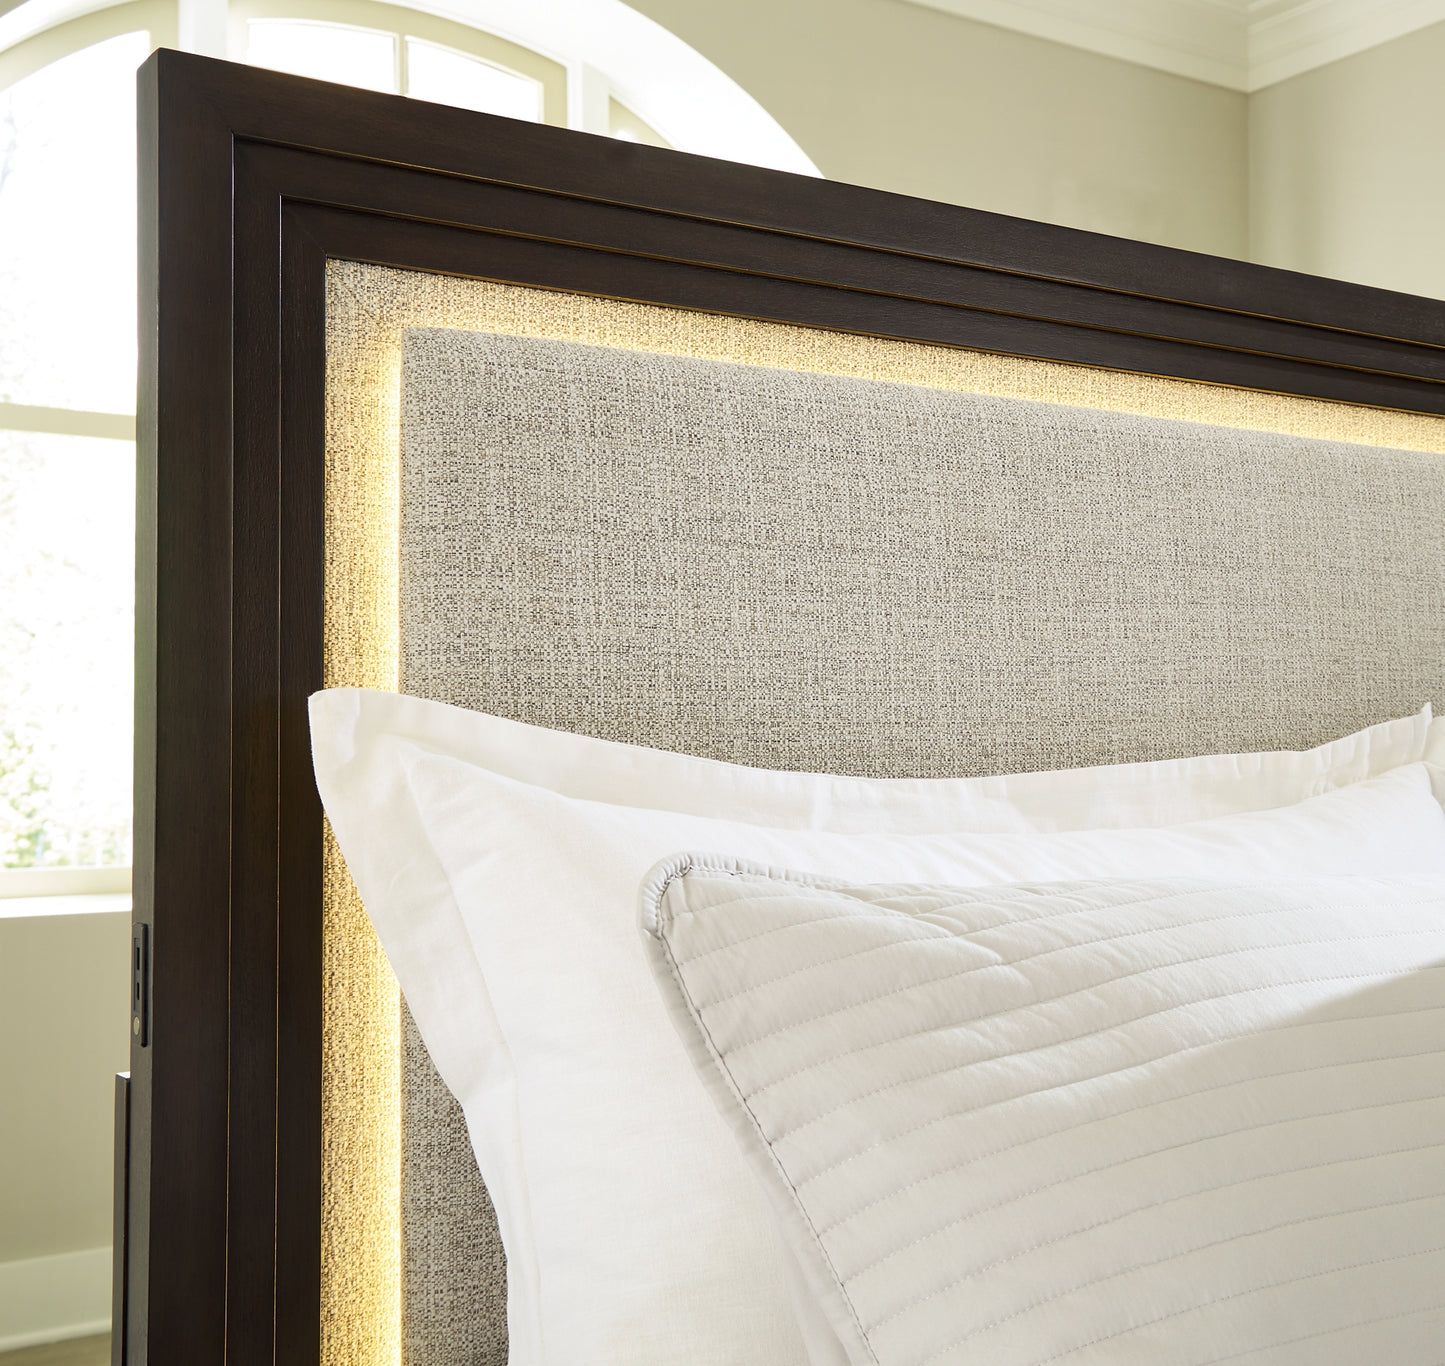 Neymorton California  Upholstered Panel Bed